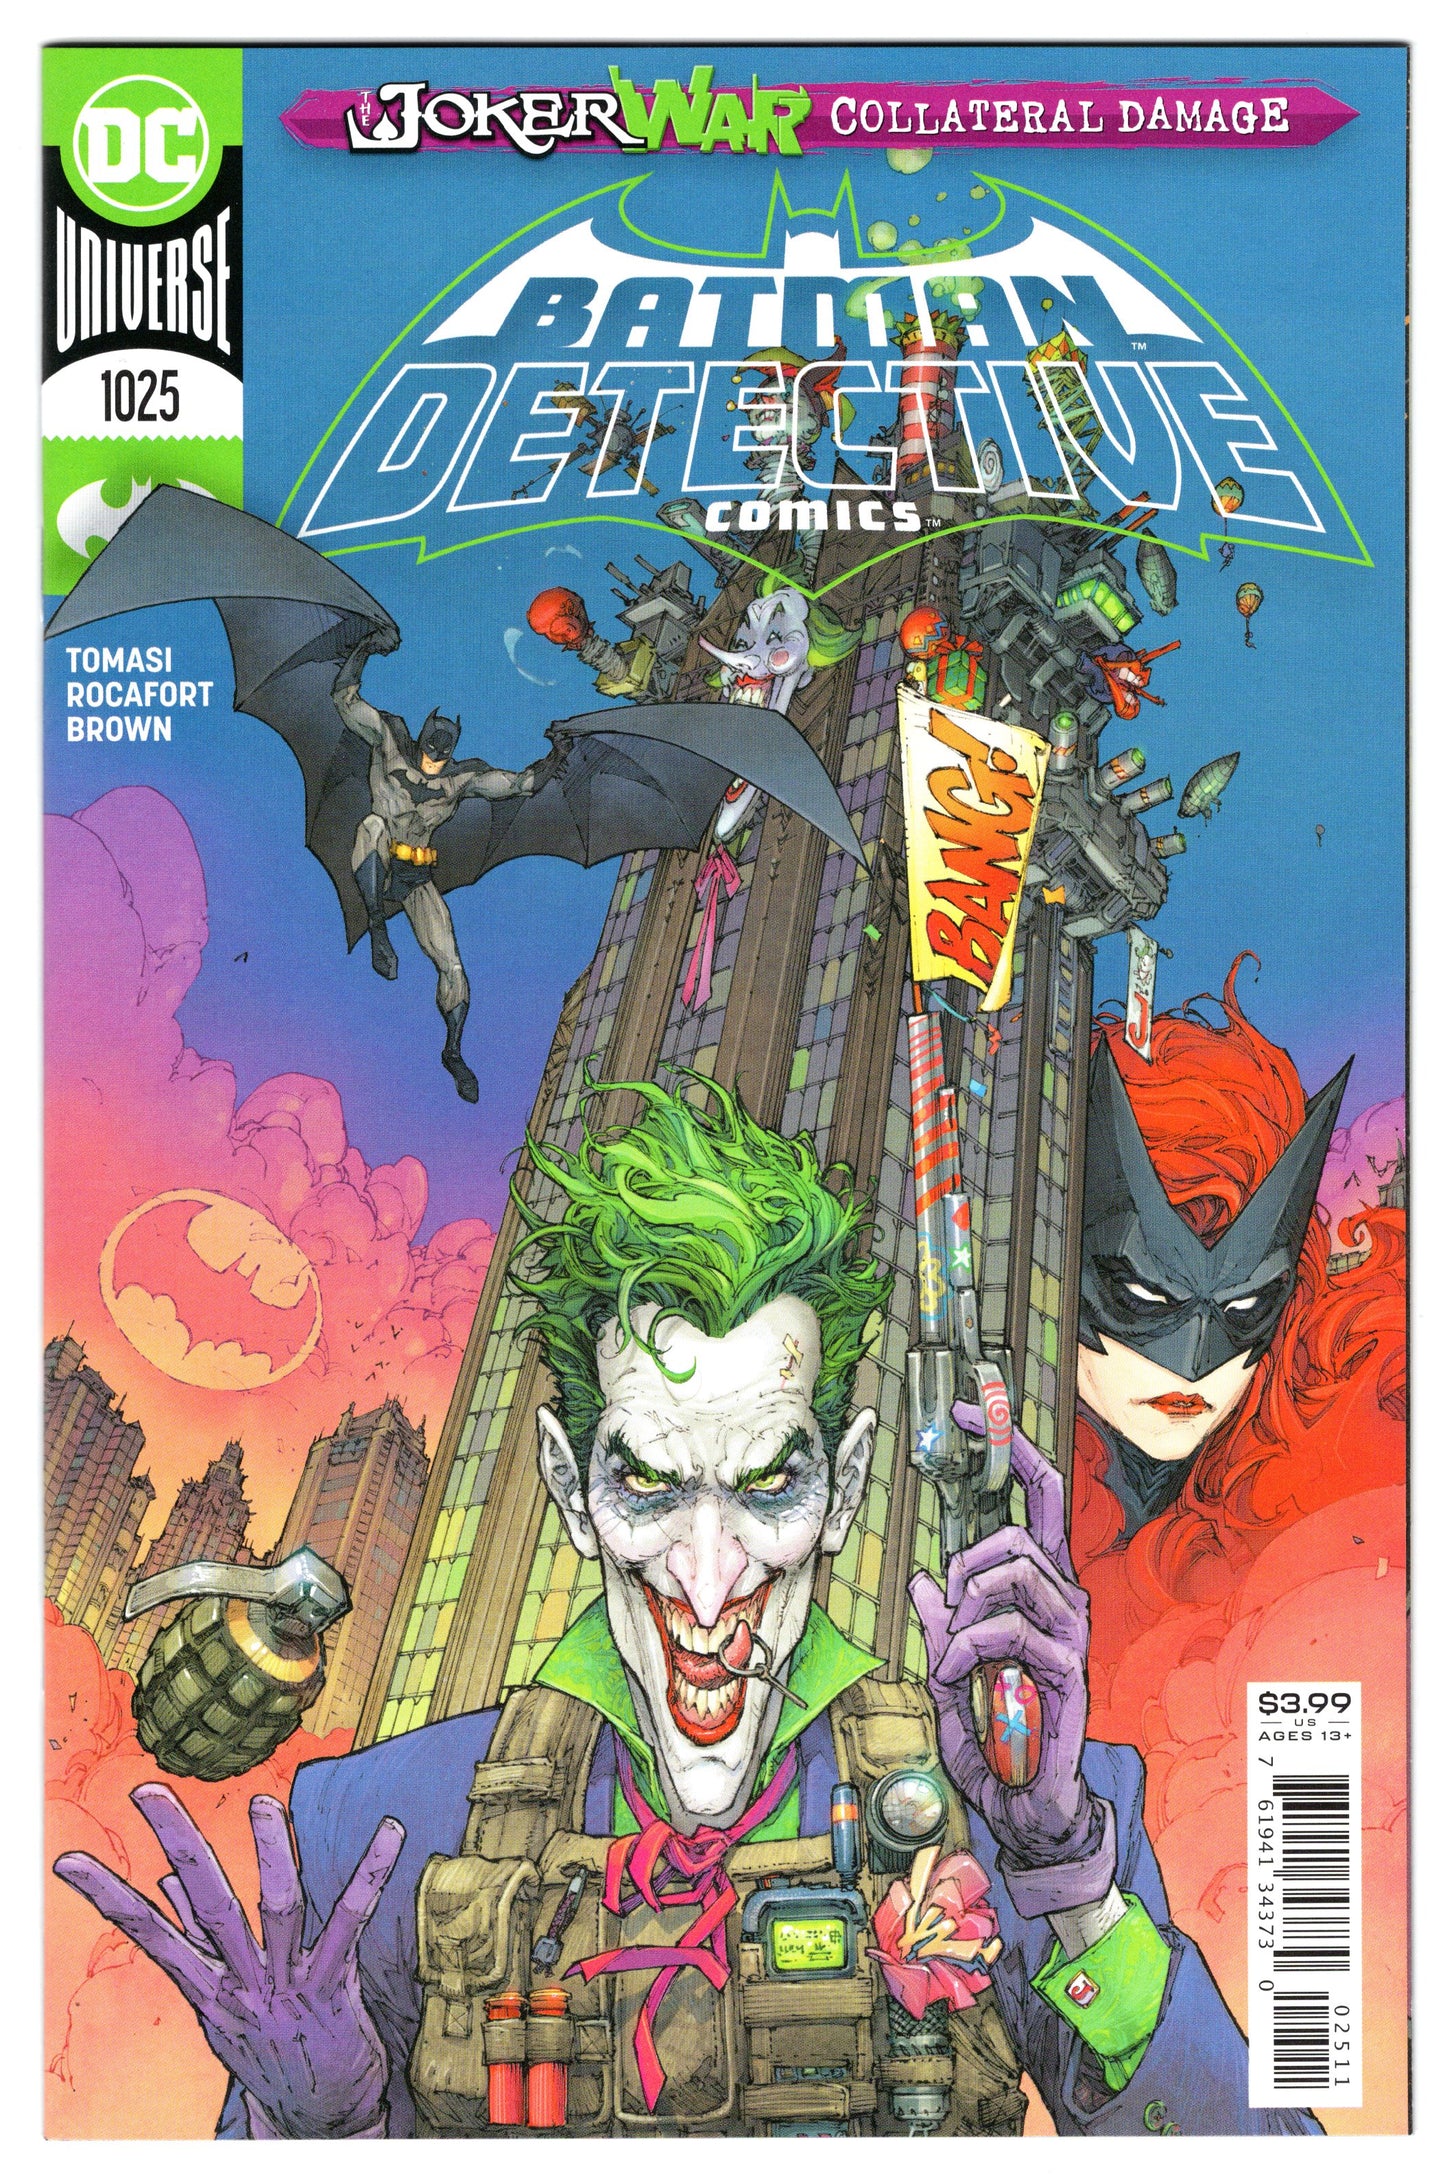 Detective Comics #1025 "Joker War Colateral Damage!" (Oct. 2020 - Marvel) NM